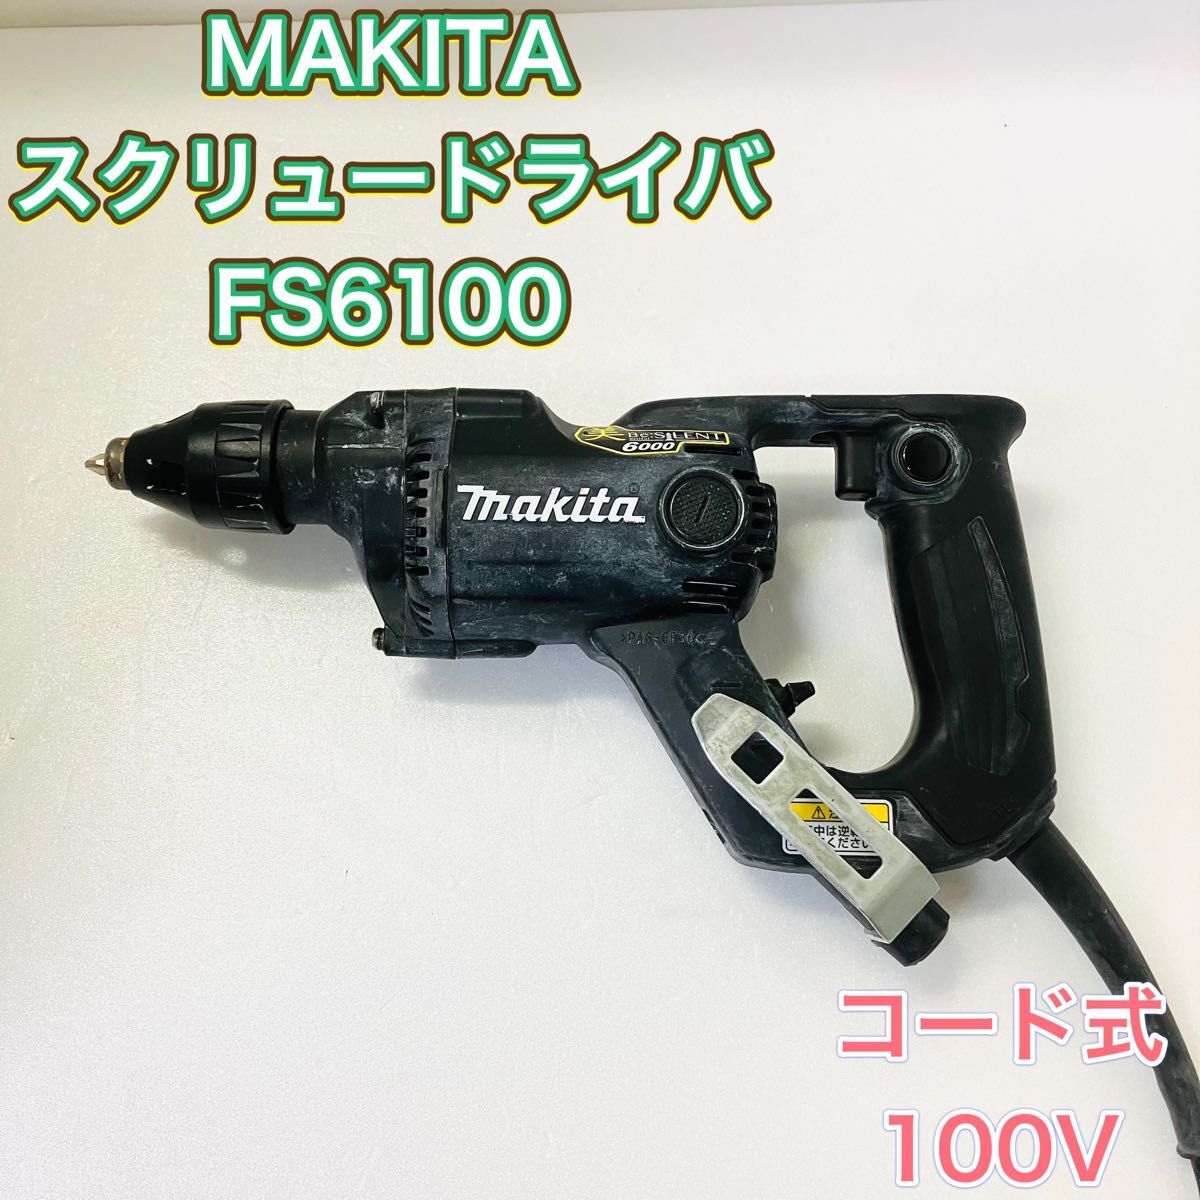 MAKITA マキタ FS6100S スクリュードライバ ボード用ドライバー コード式 黒 ブラック 新品 ビット付属 回転 工具